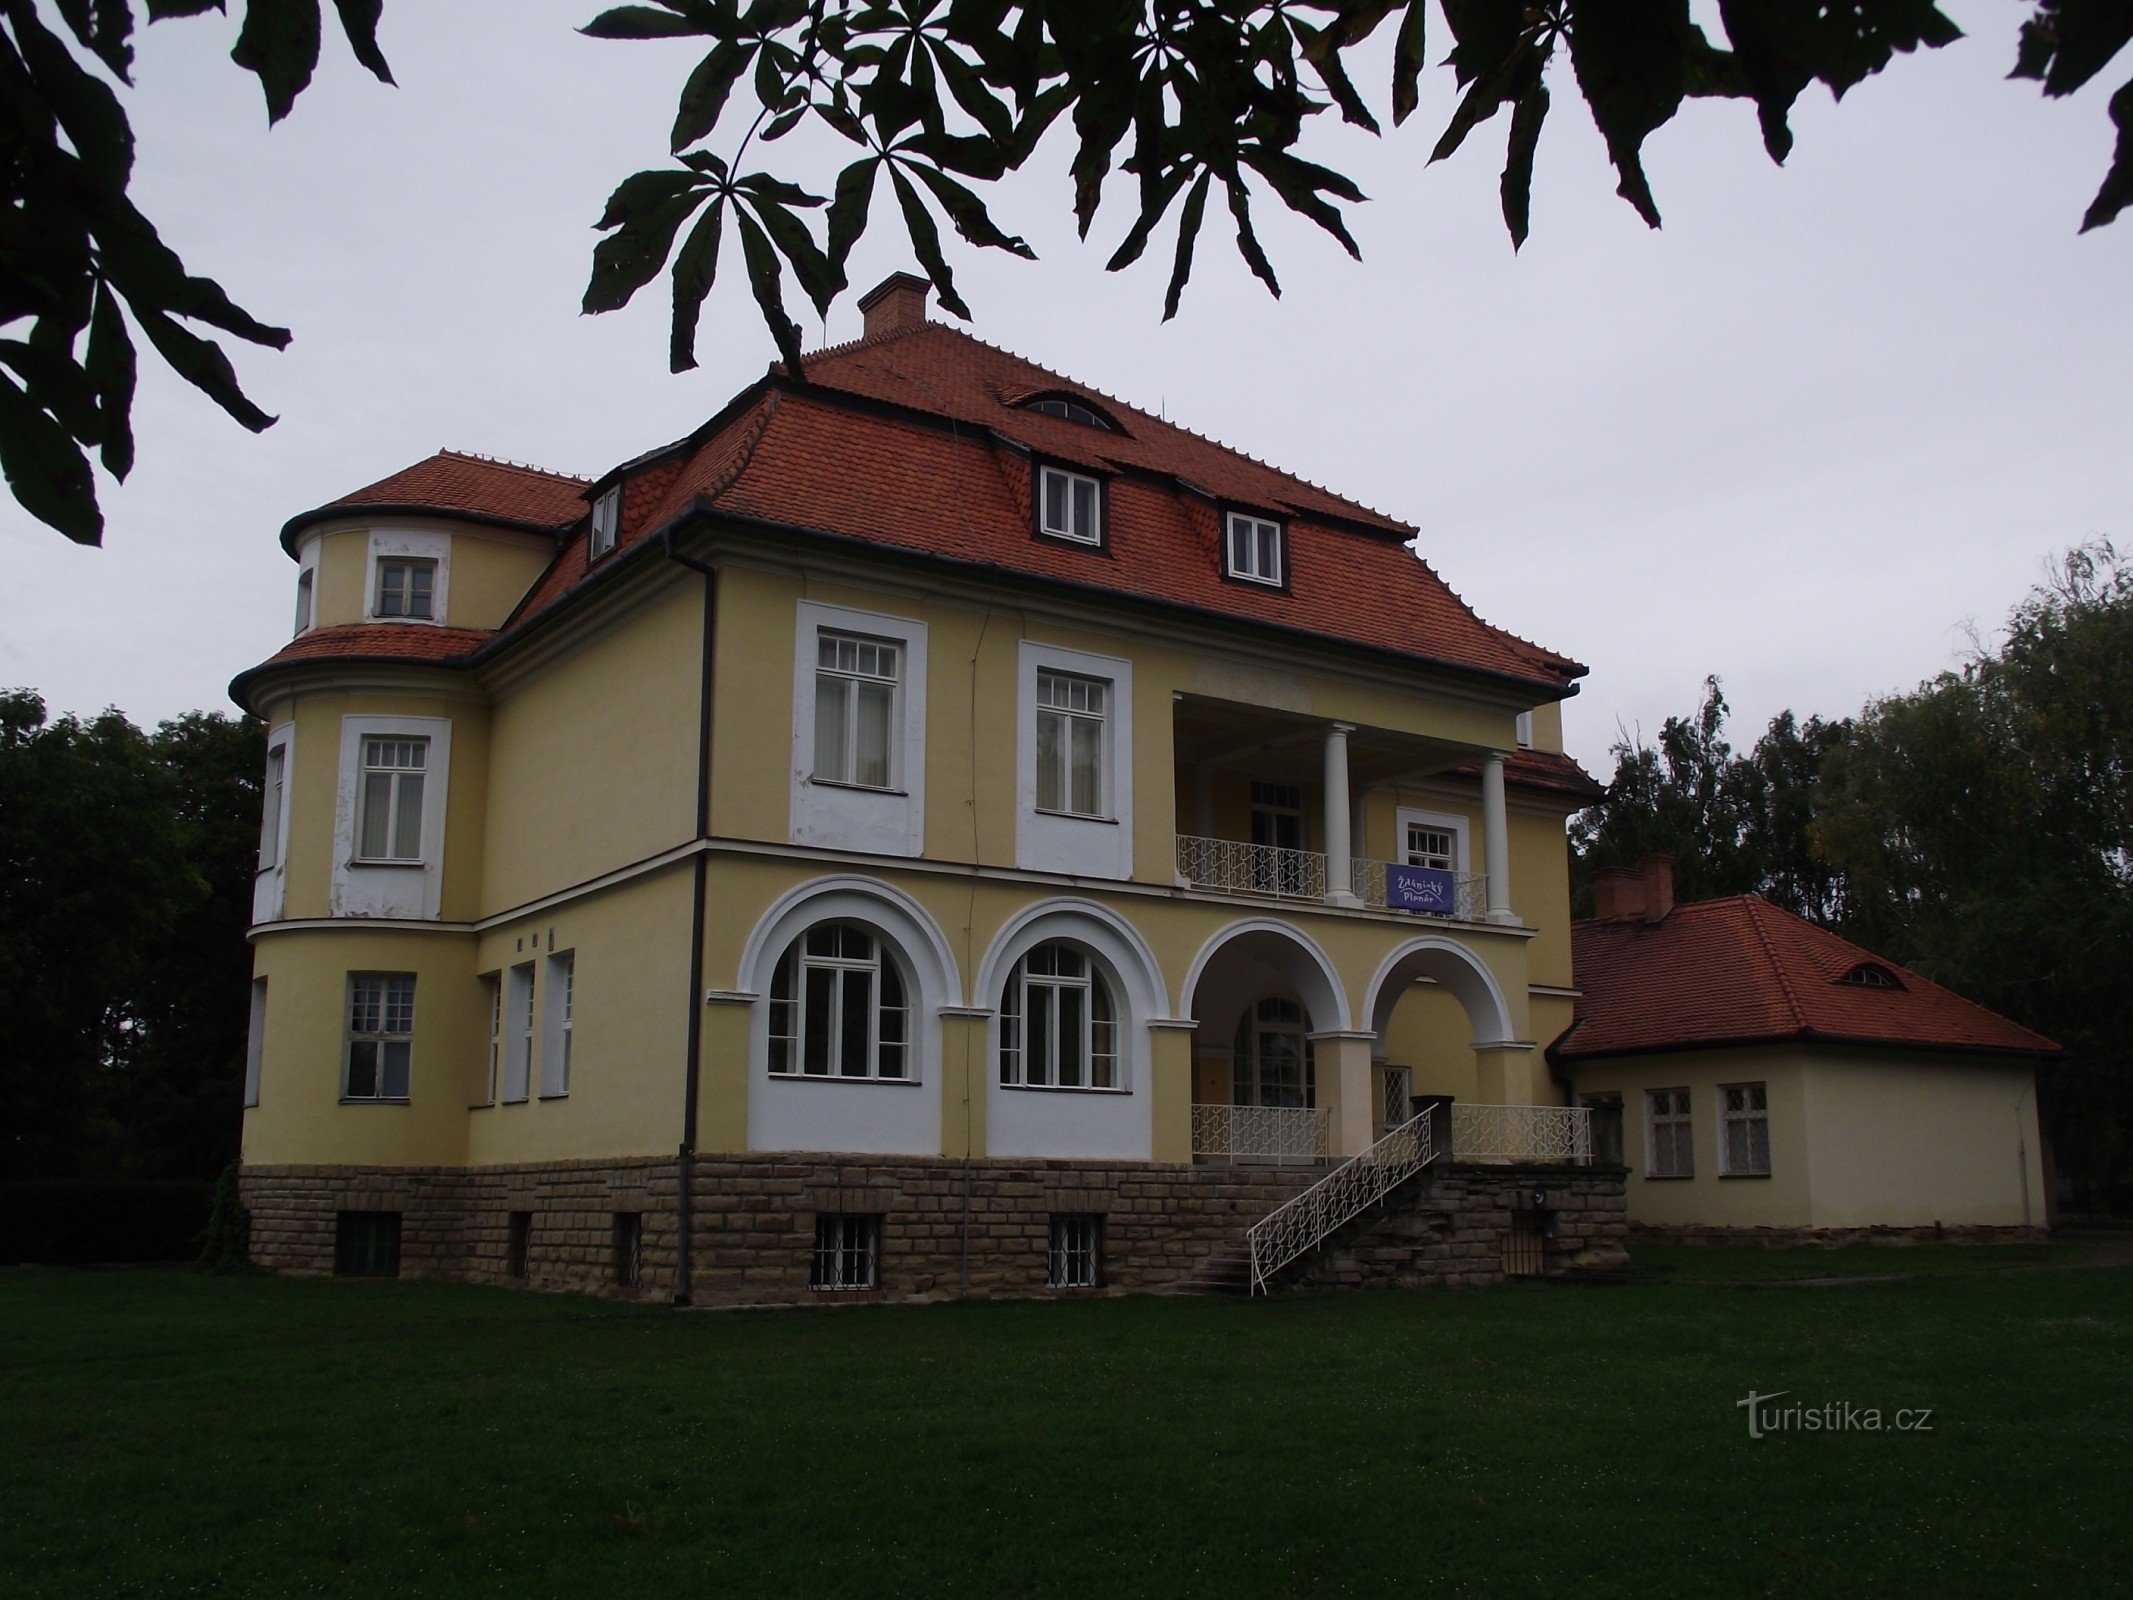 Ždánice - villa del castillo (Seidl's / Loudon's)